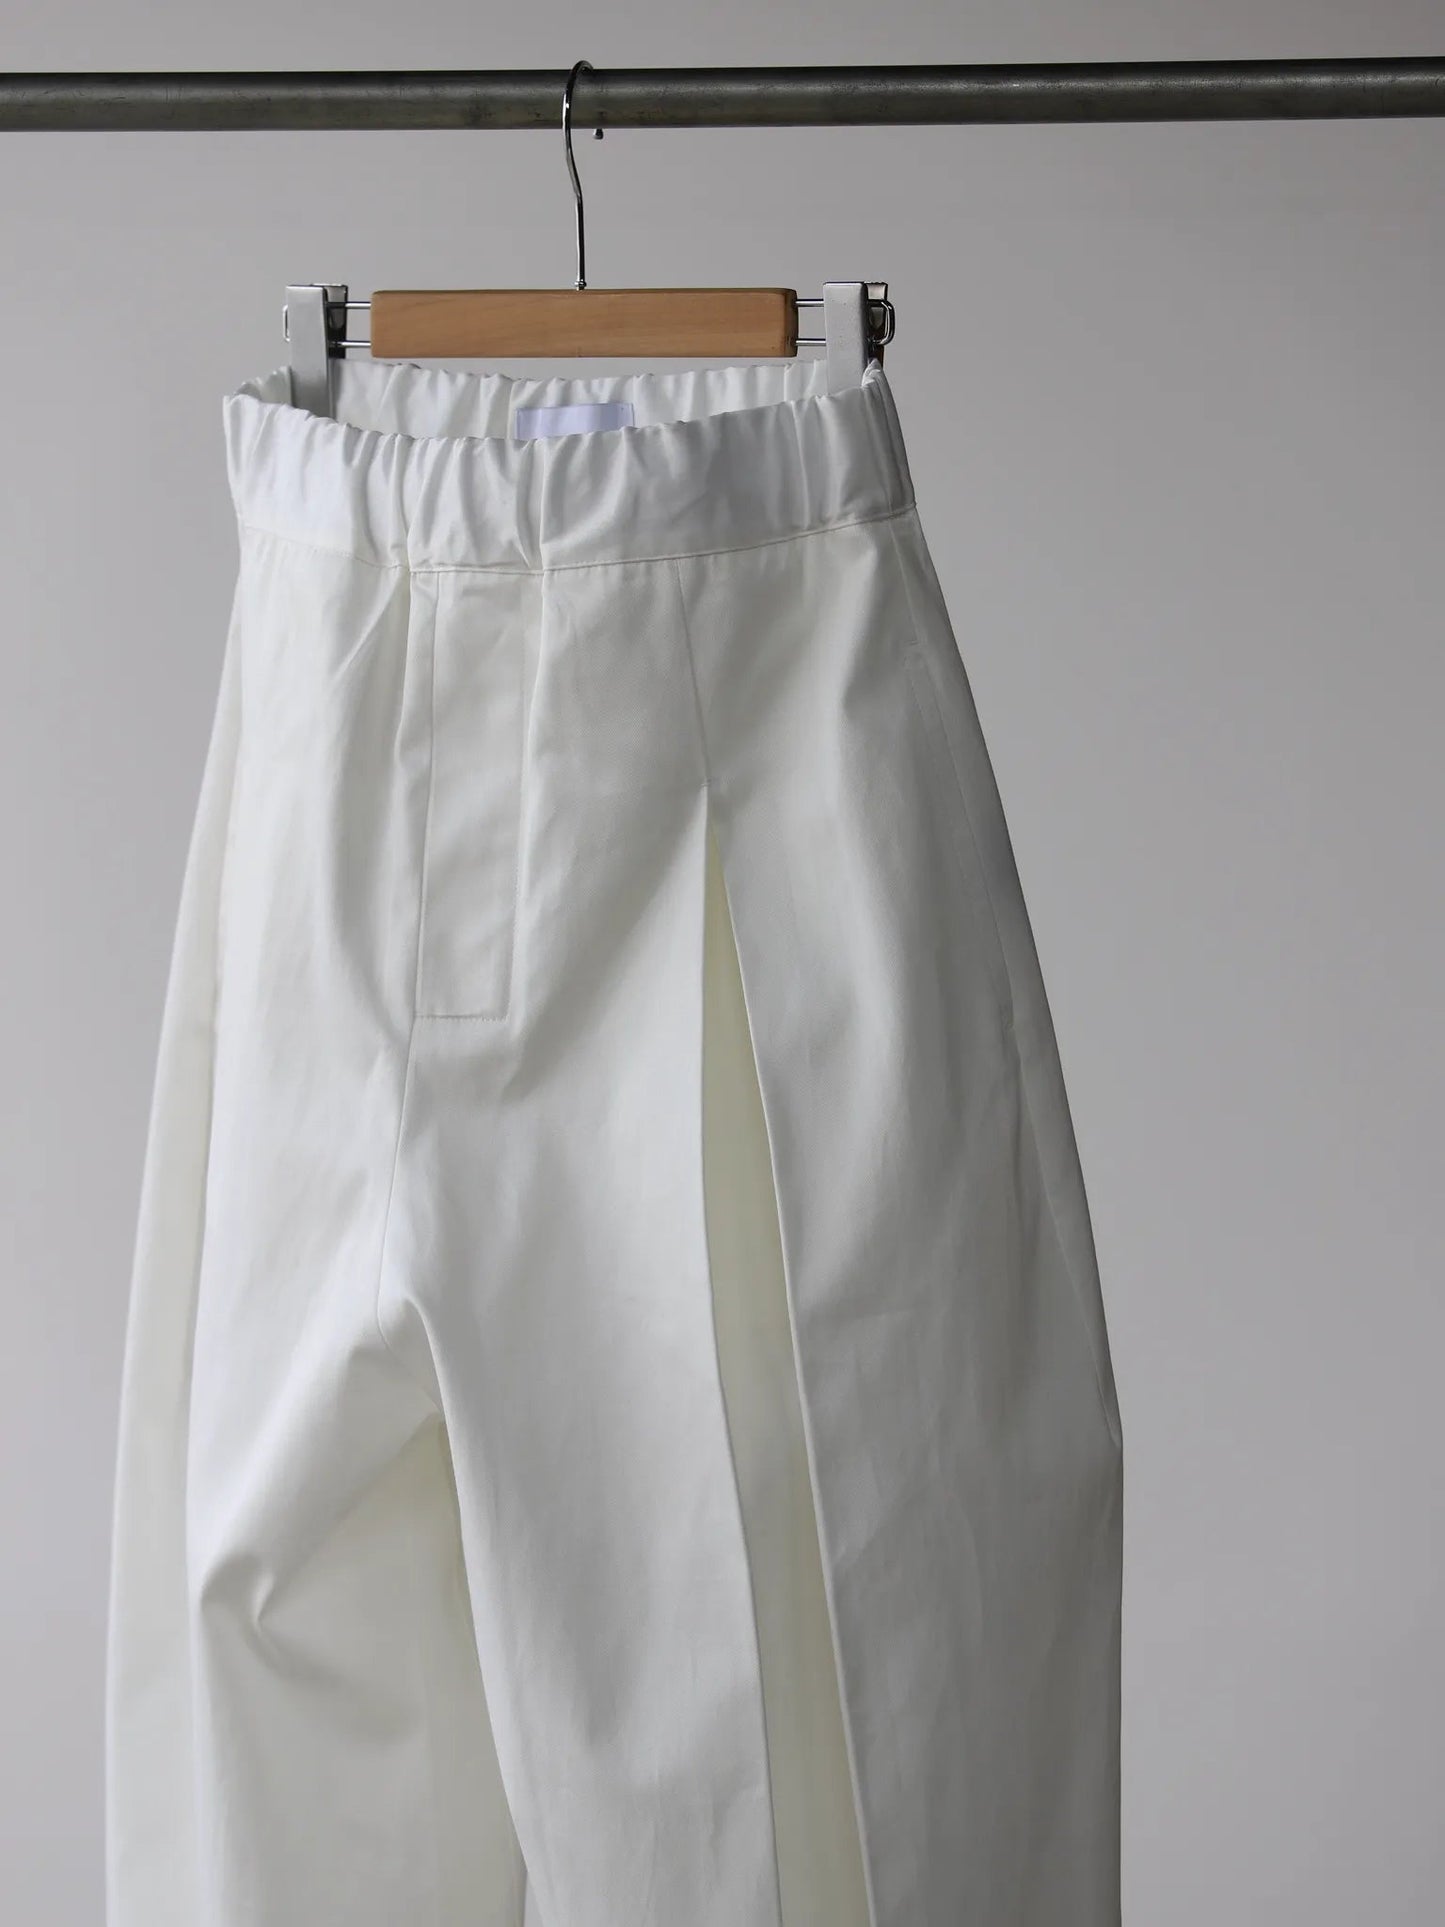 sage-nation-box-pleat-trouser-optic-white-1-5